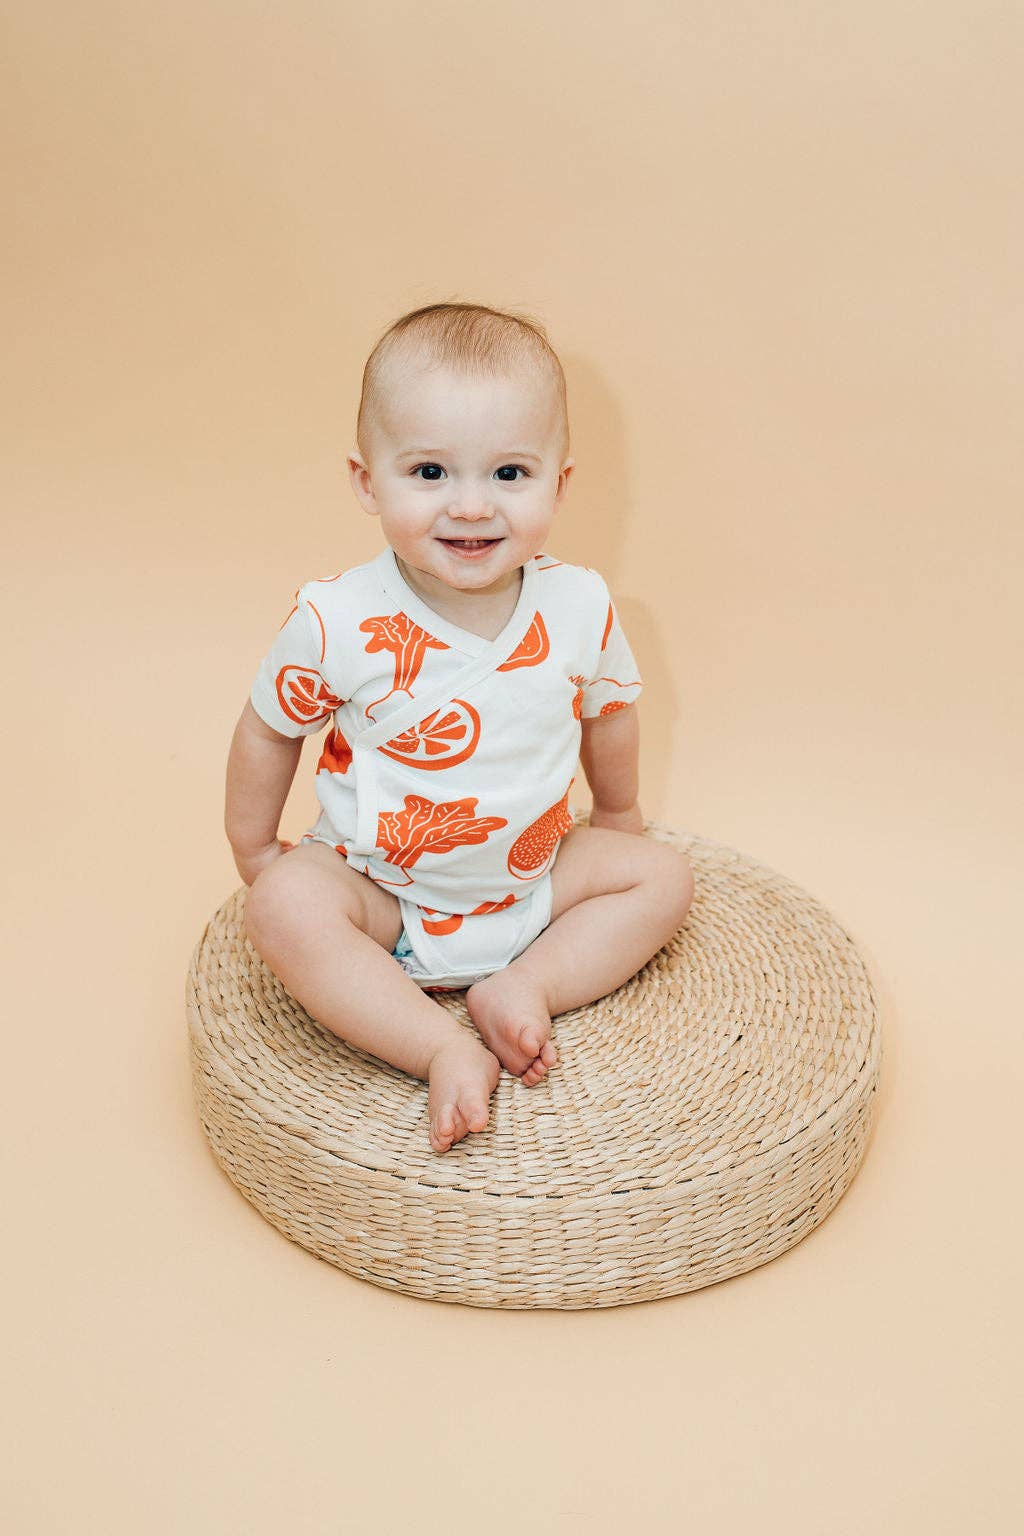 Baby sitting on a straw basket wearing fruit baby bodysuit